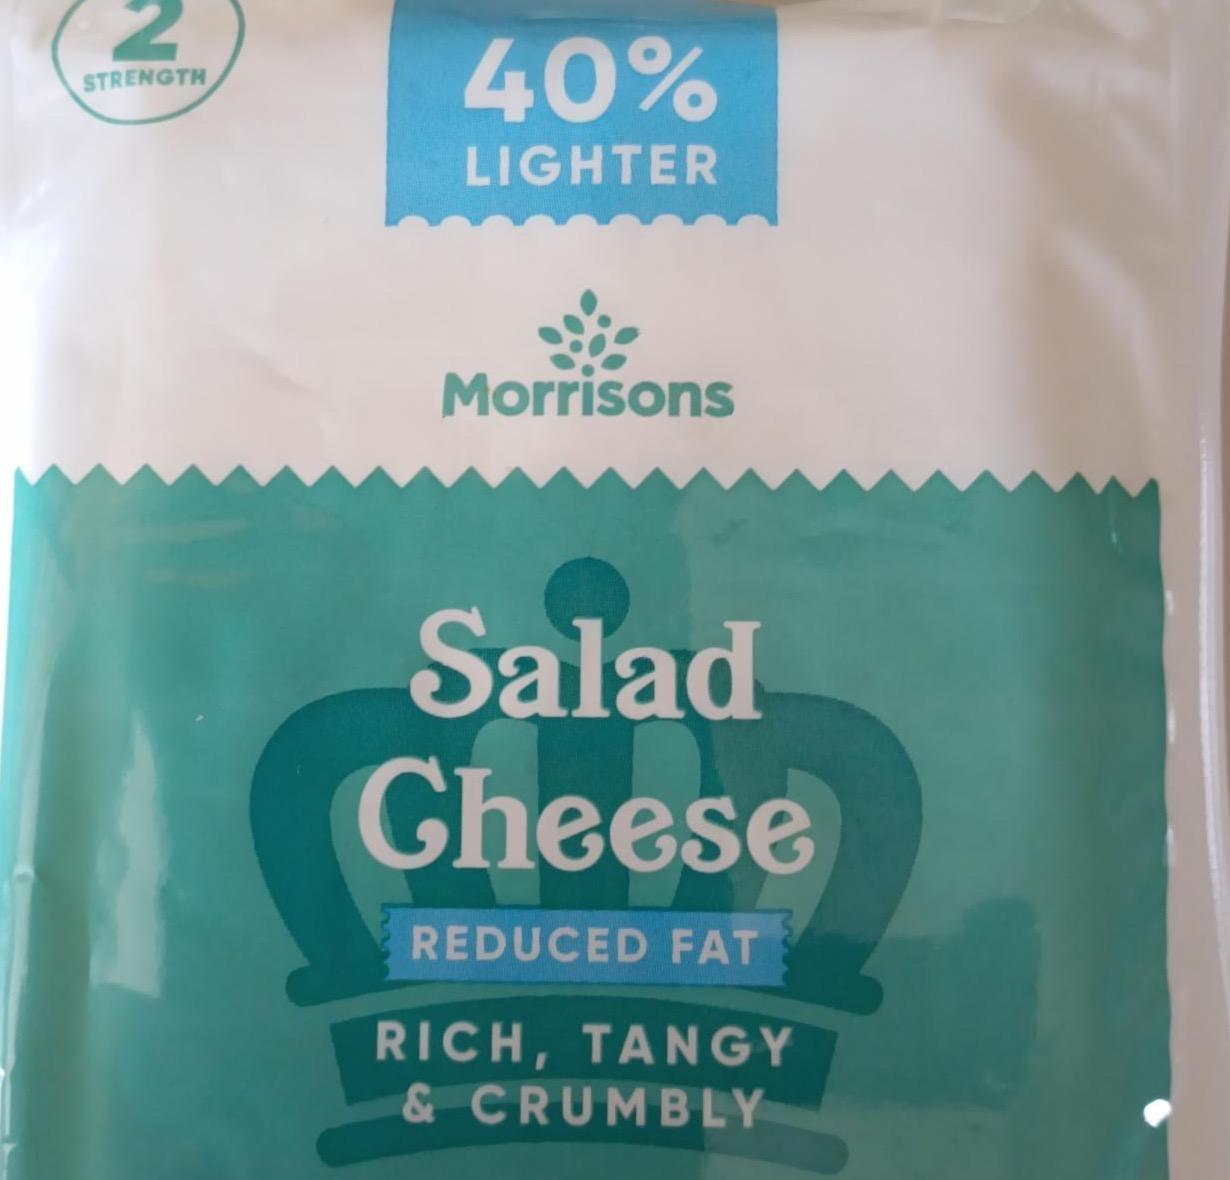 Фото - Salad Cheese reduce fat 40% lighter Morrisons